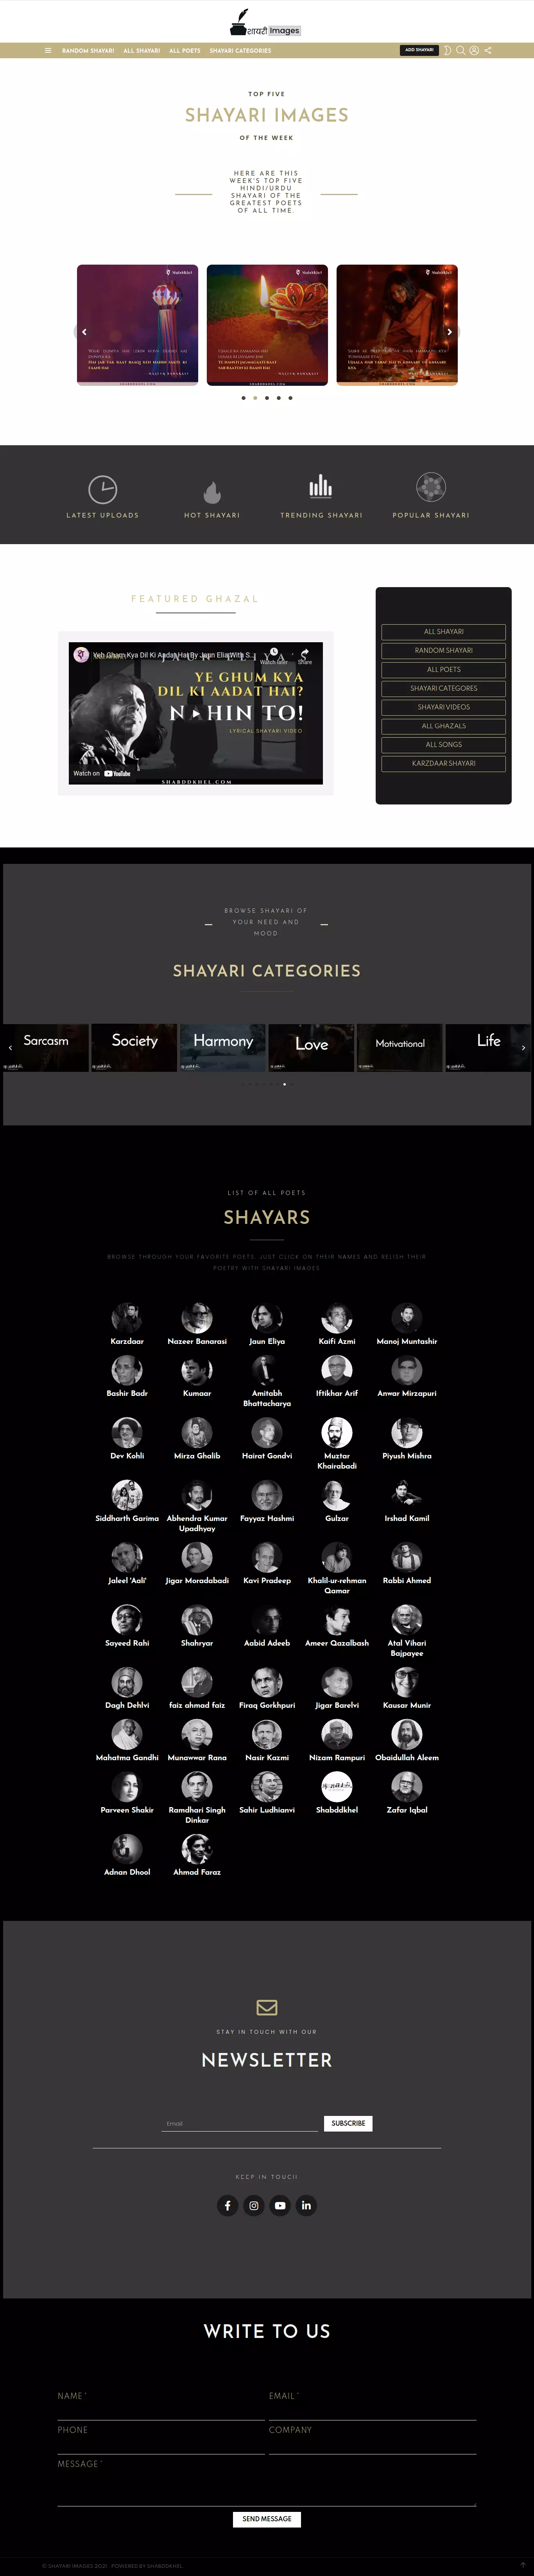 BrandKob Projects - Shayari Images - Shabddkhel Homepage